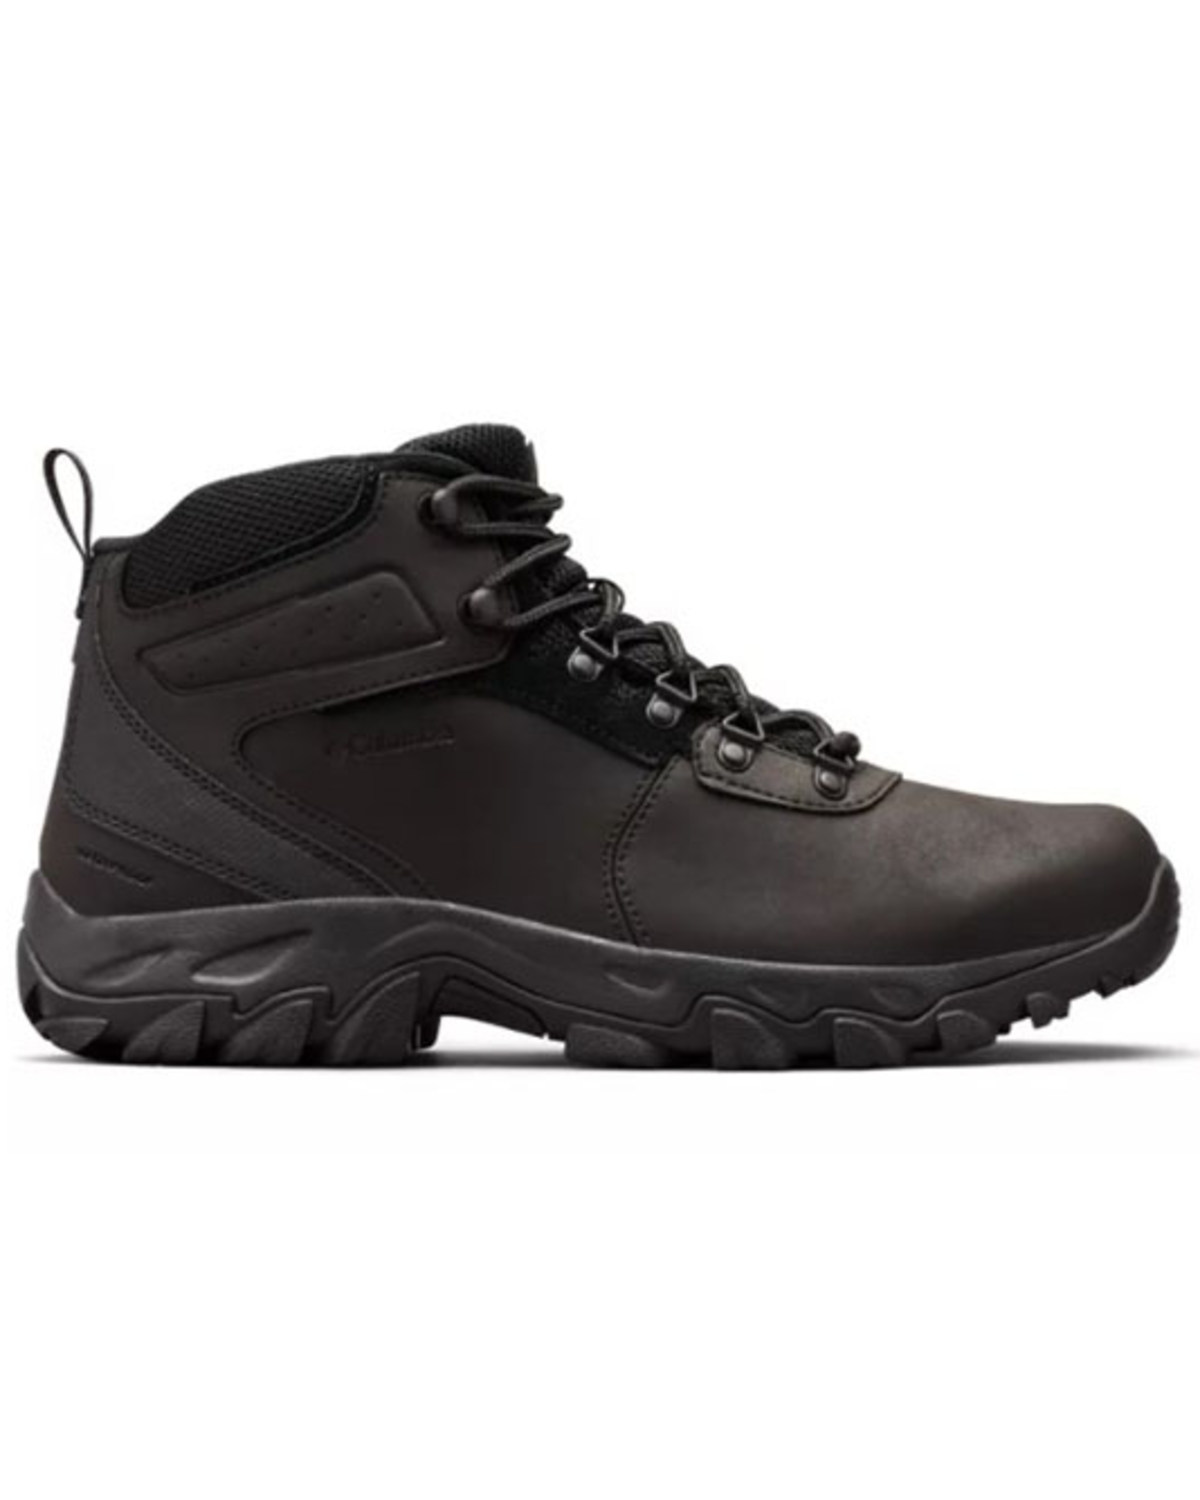 Columbia Men's Newton Ridge Black Waterproof Hiking Boots - Soft Toe ...